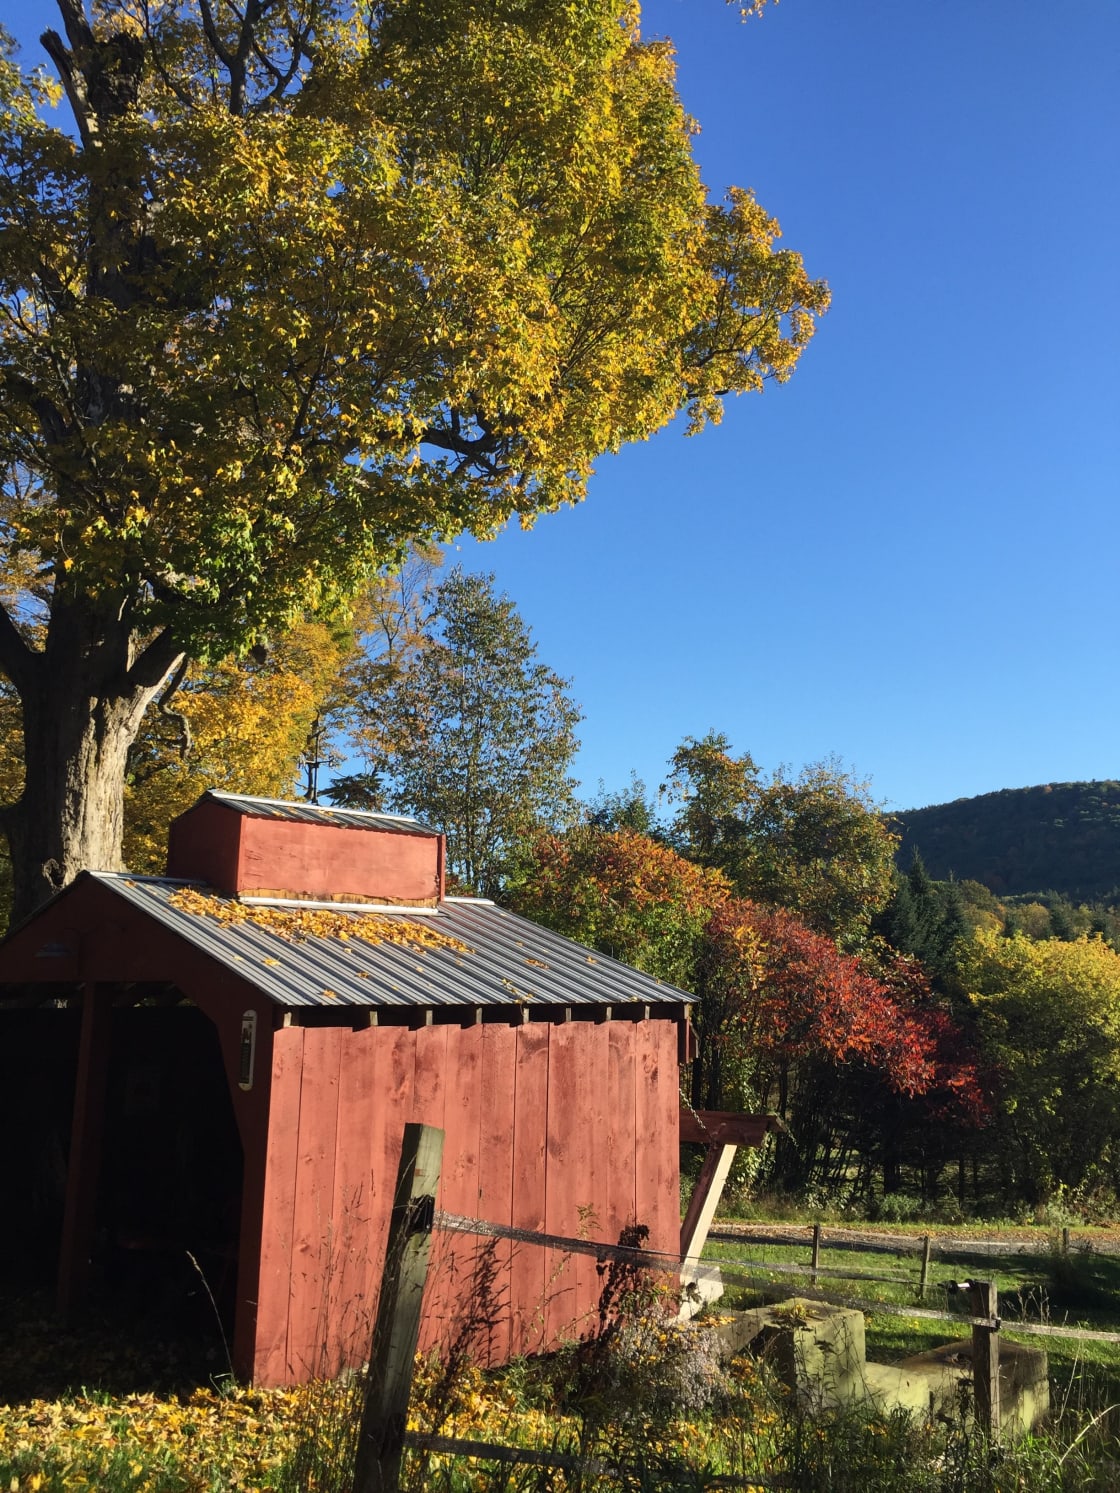 Fall at Maple Ridge Farm is beautiful!